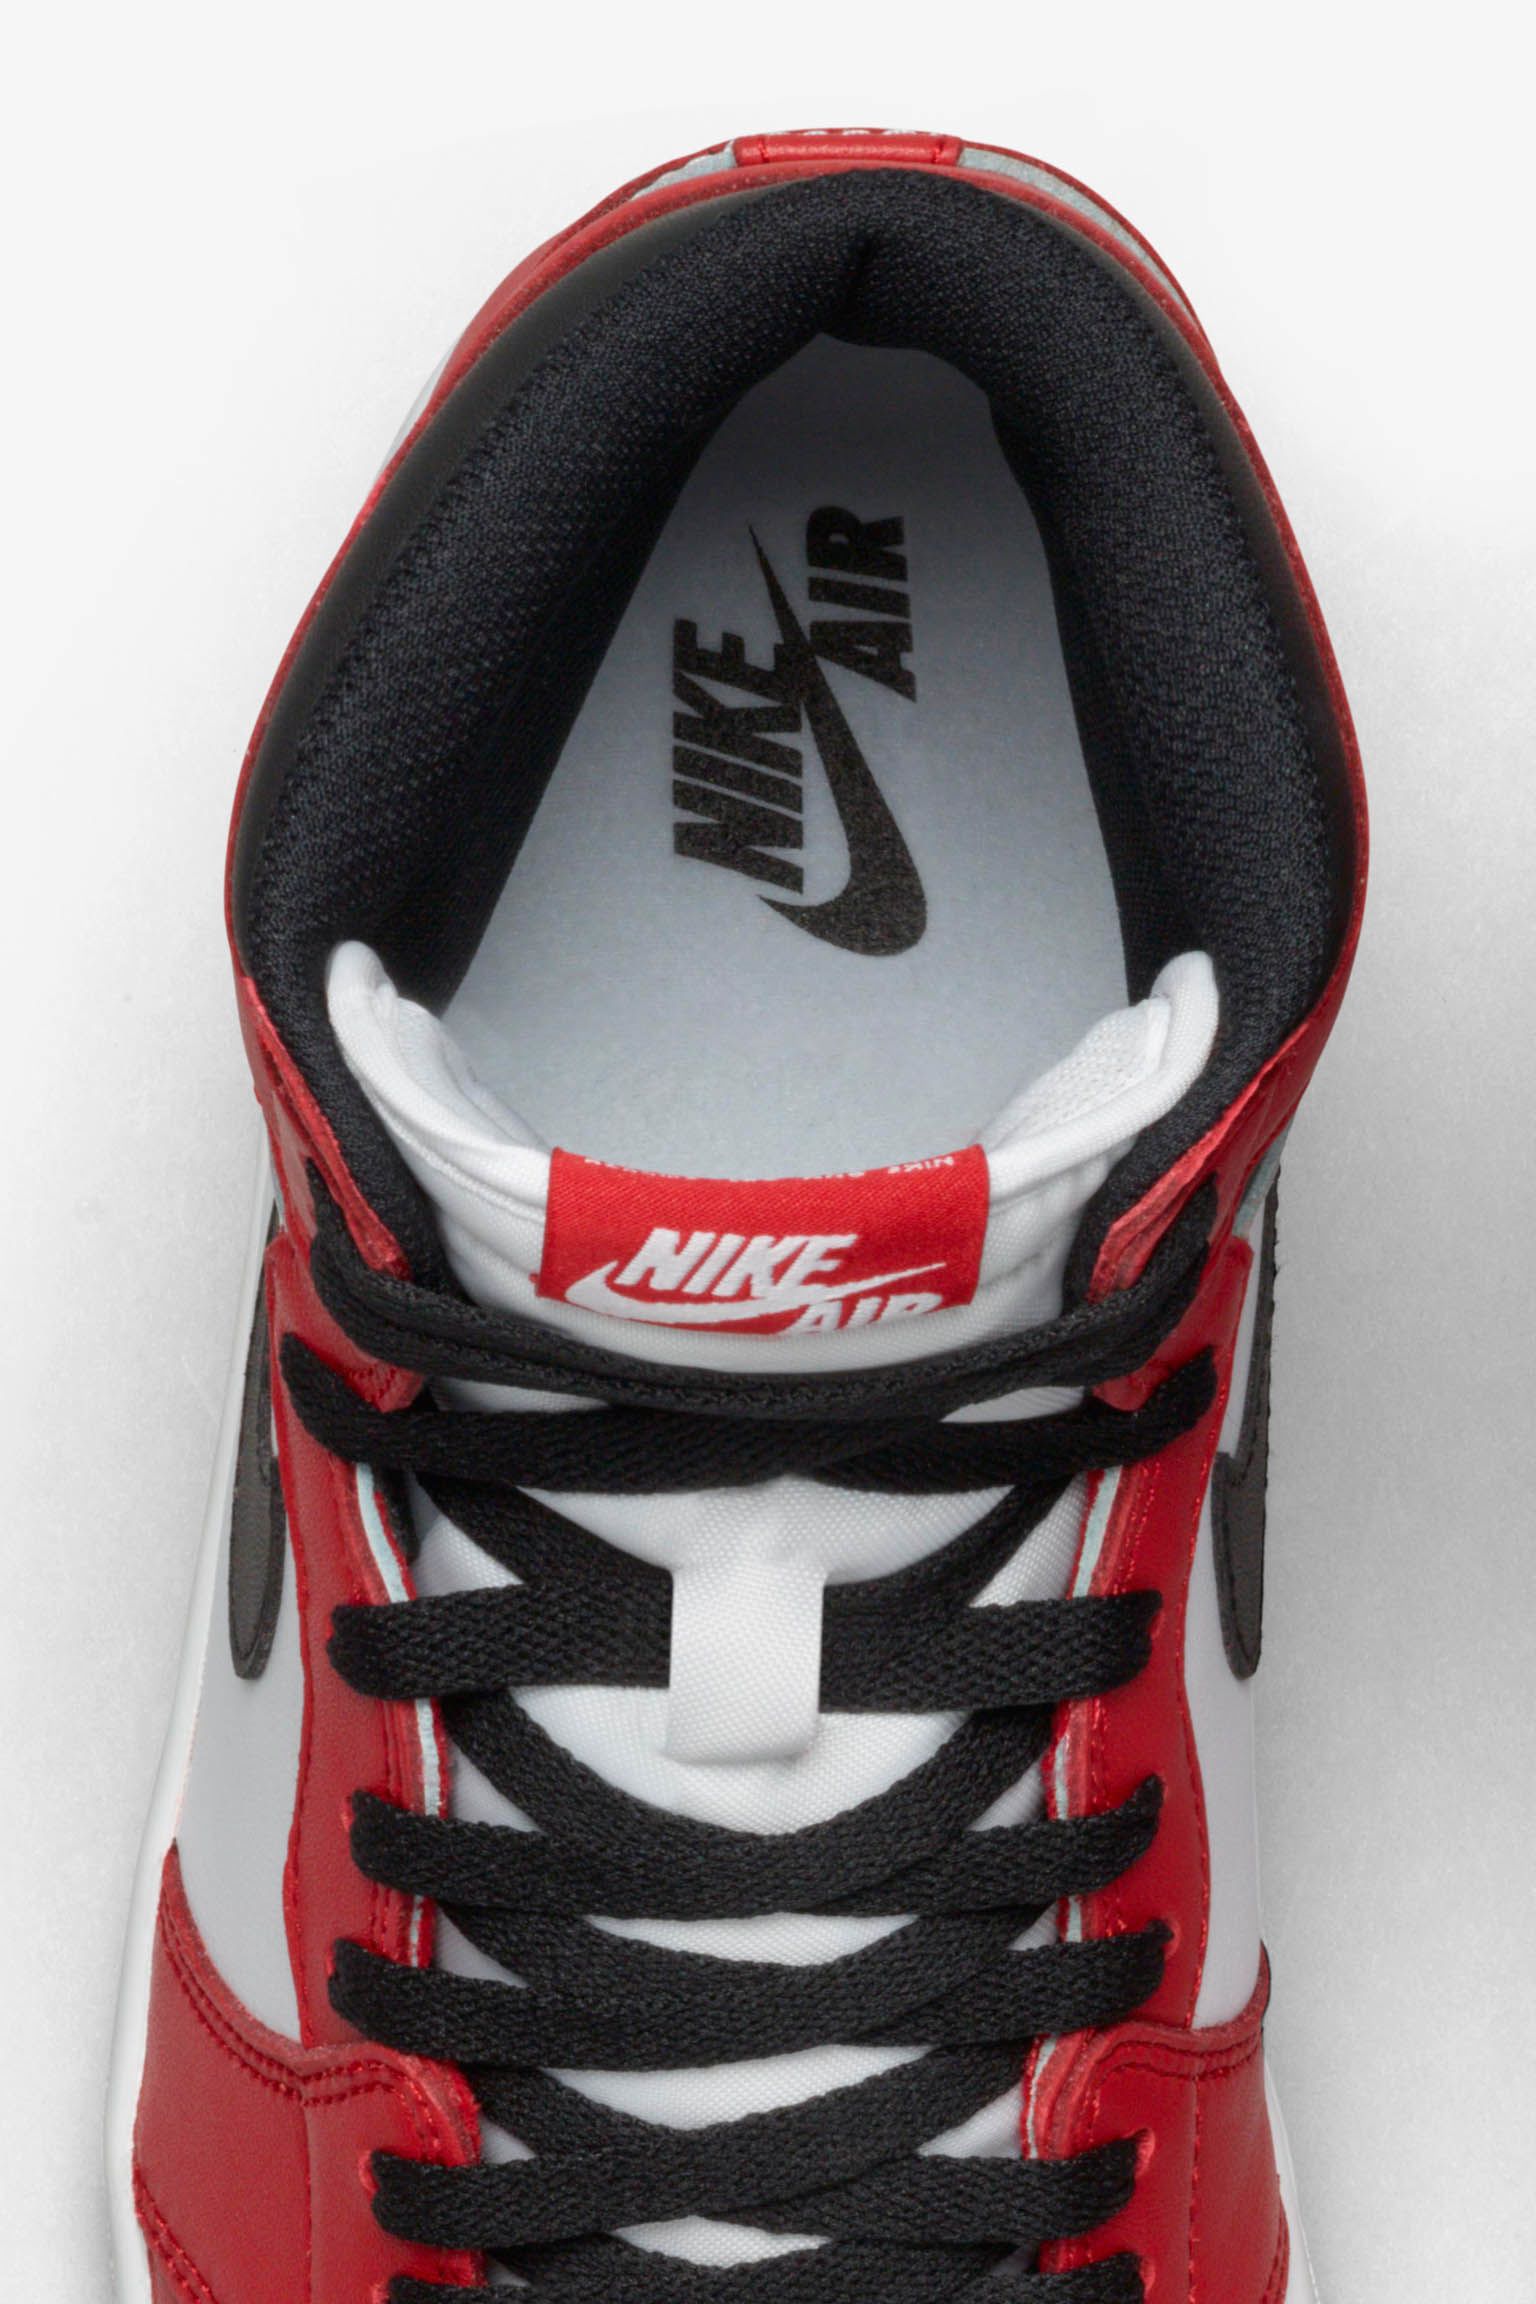 Heel short tie Air Jordan 1 Retro 'Chicago' Release Date. Nike SNKRS